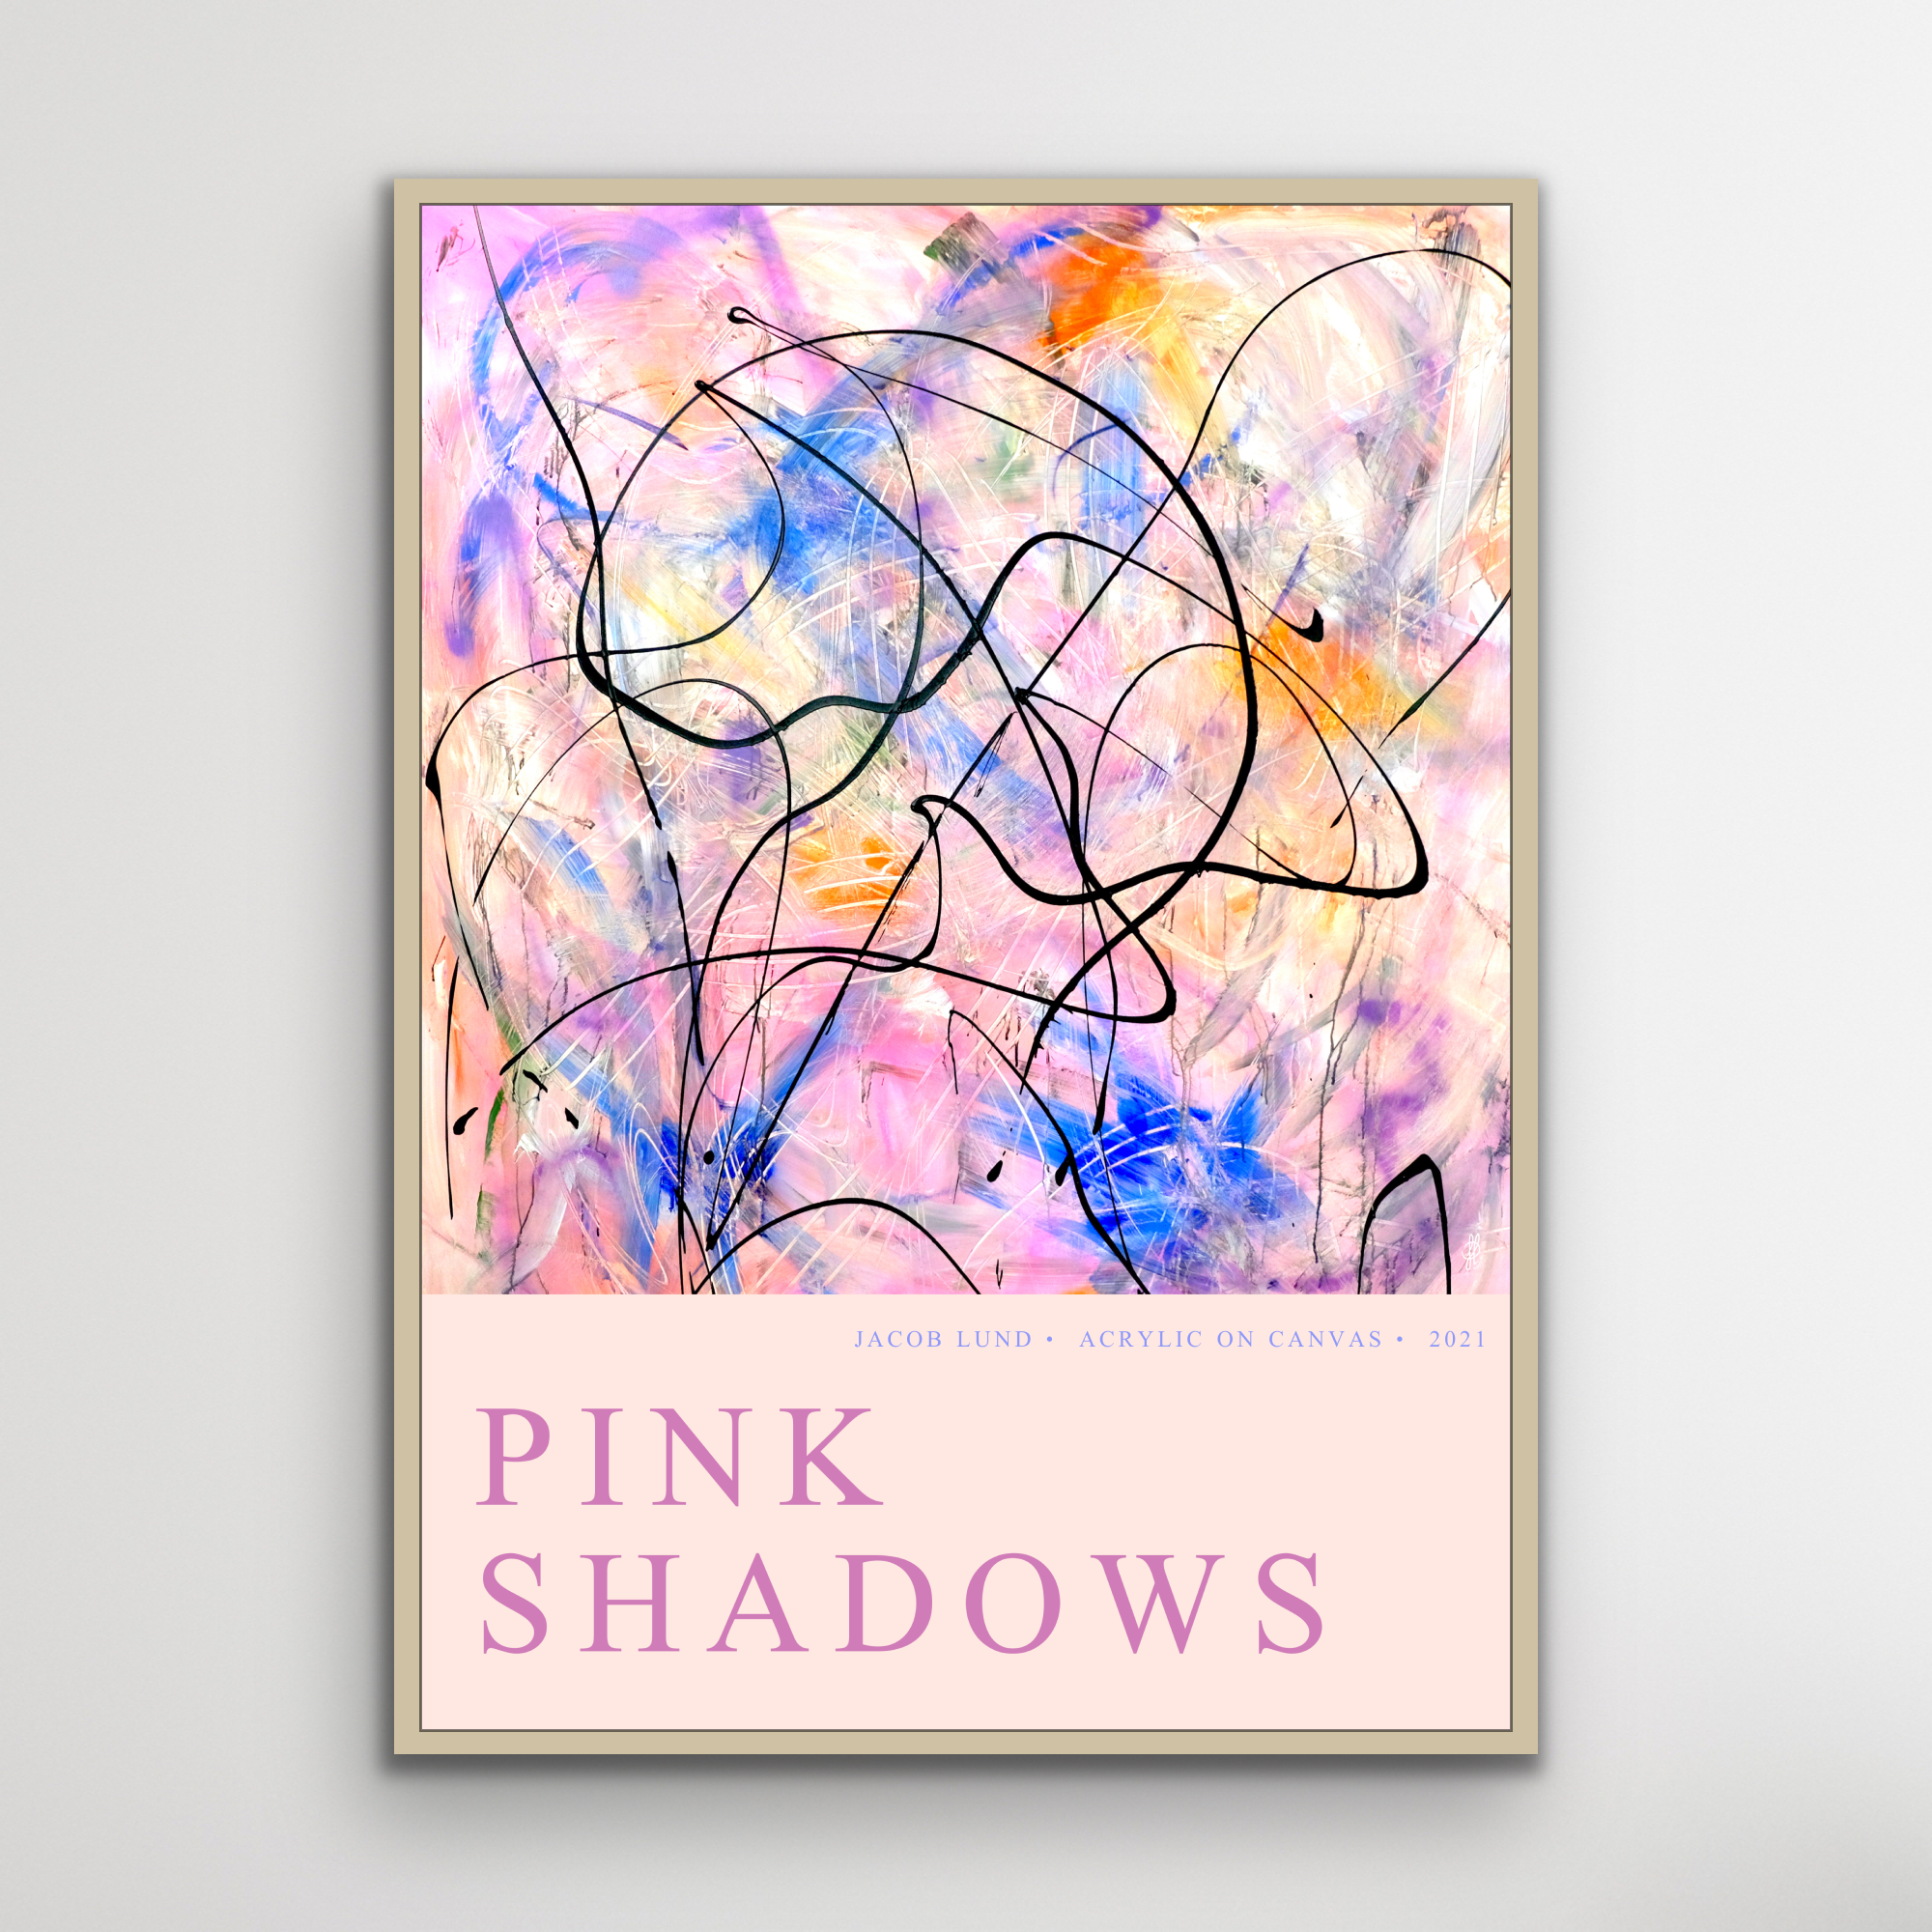 Poster: "Pink Shadows"